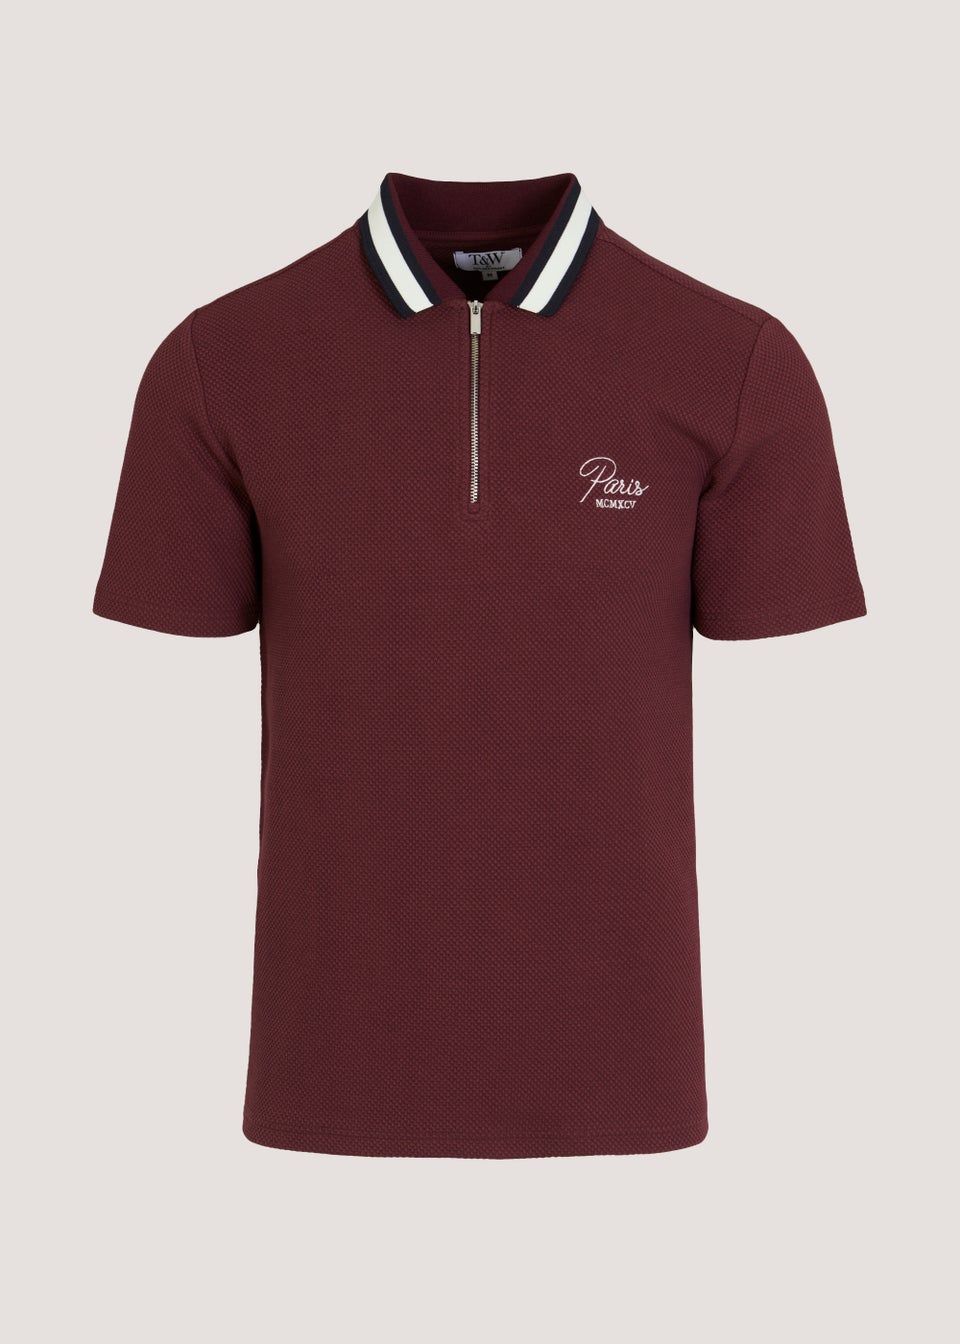 T&W Burgundy Pique Polo Shirt